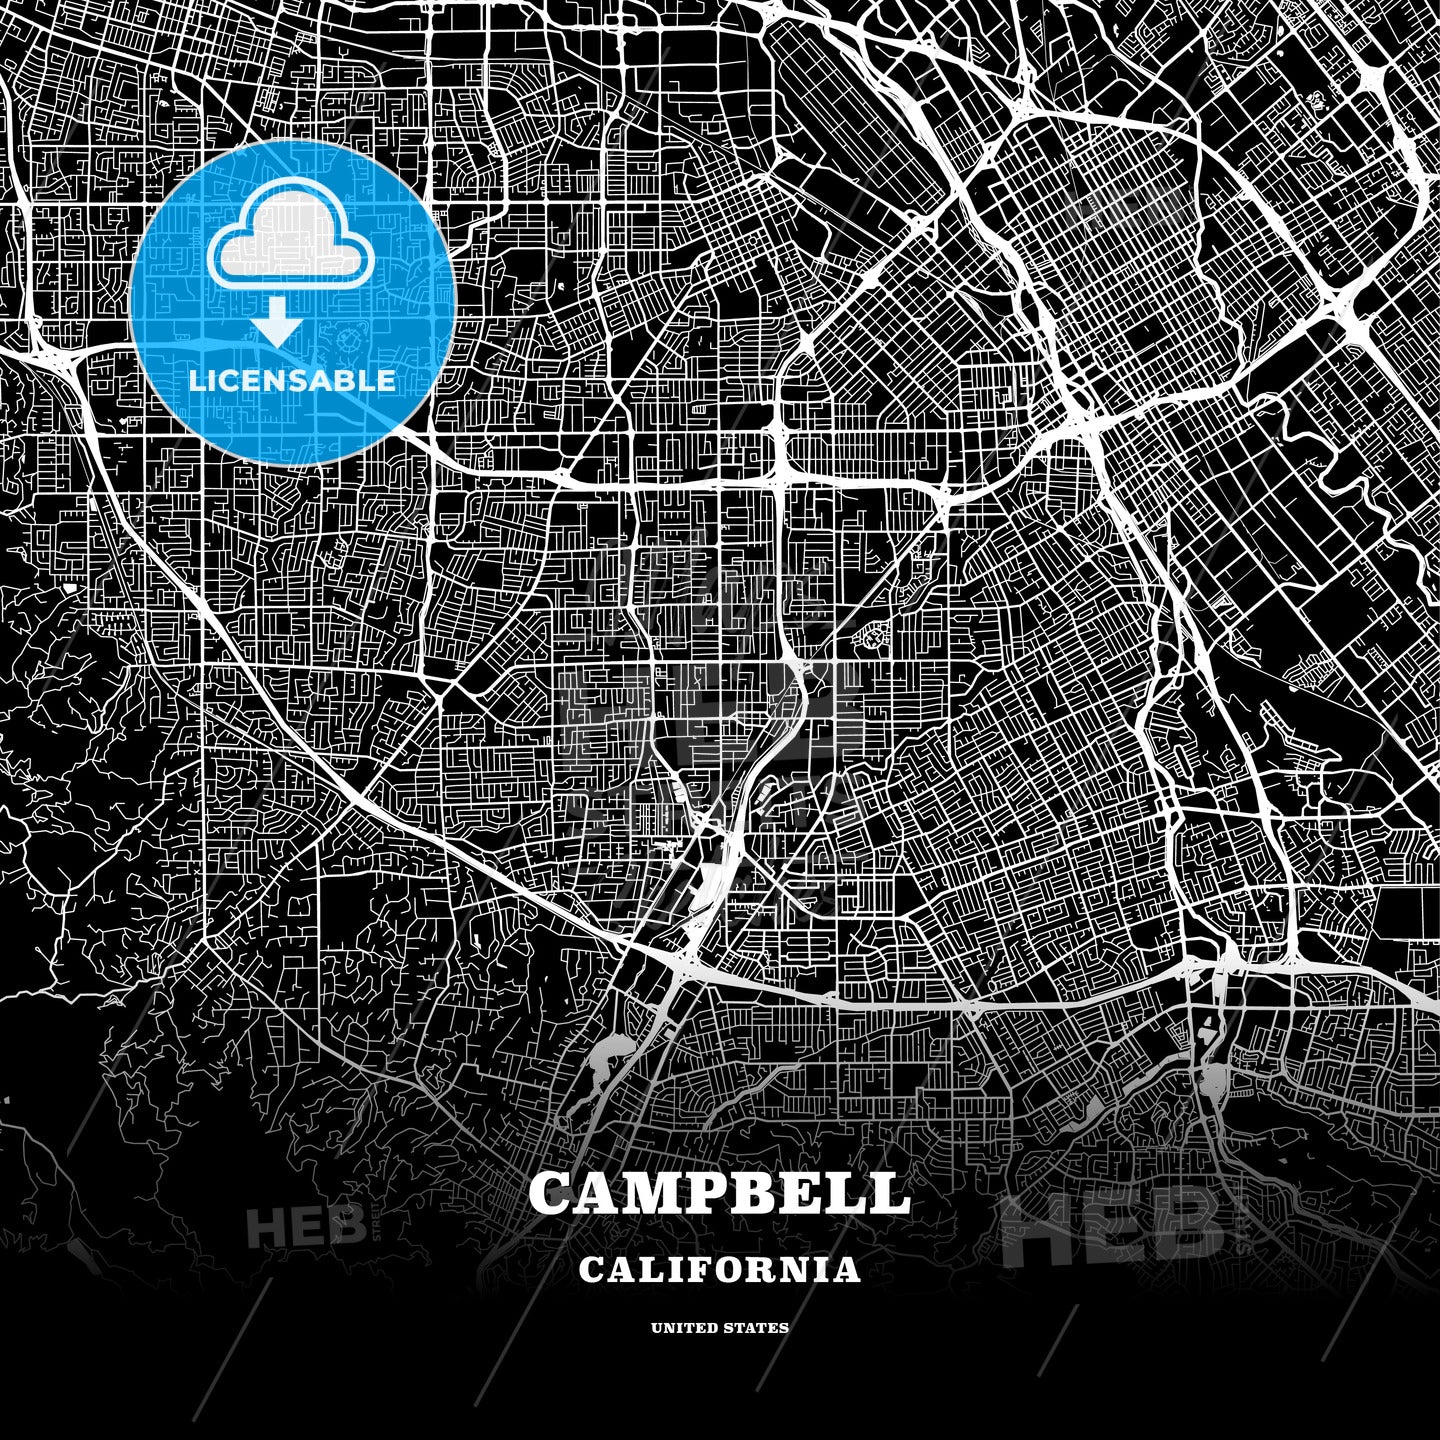 Campbell, California, USA map